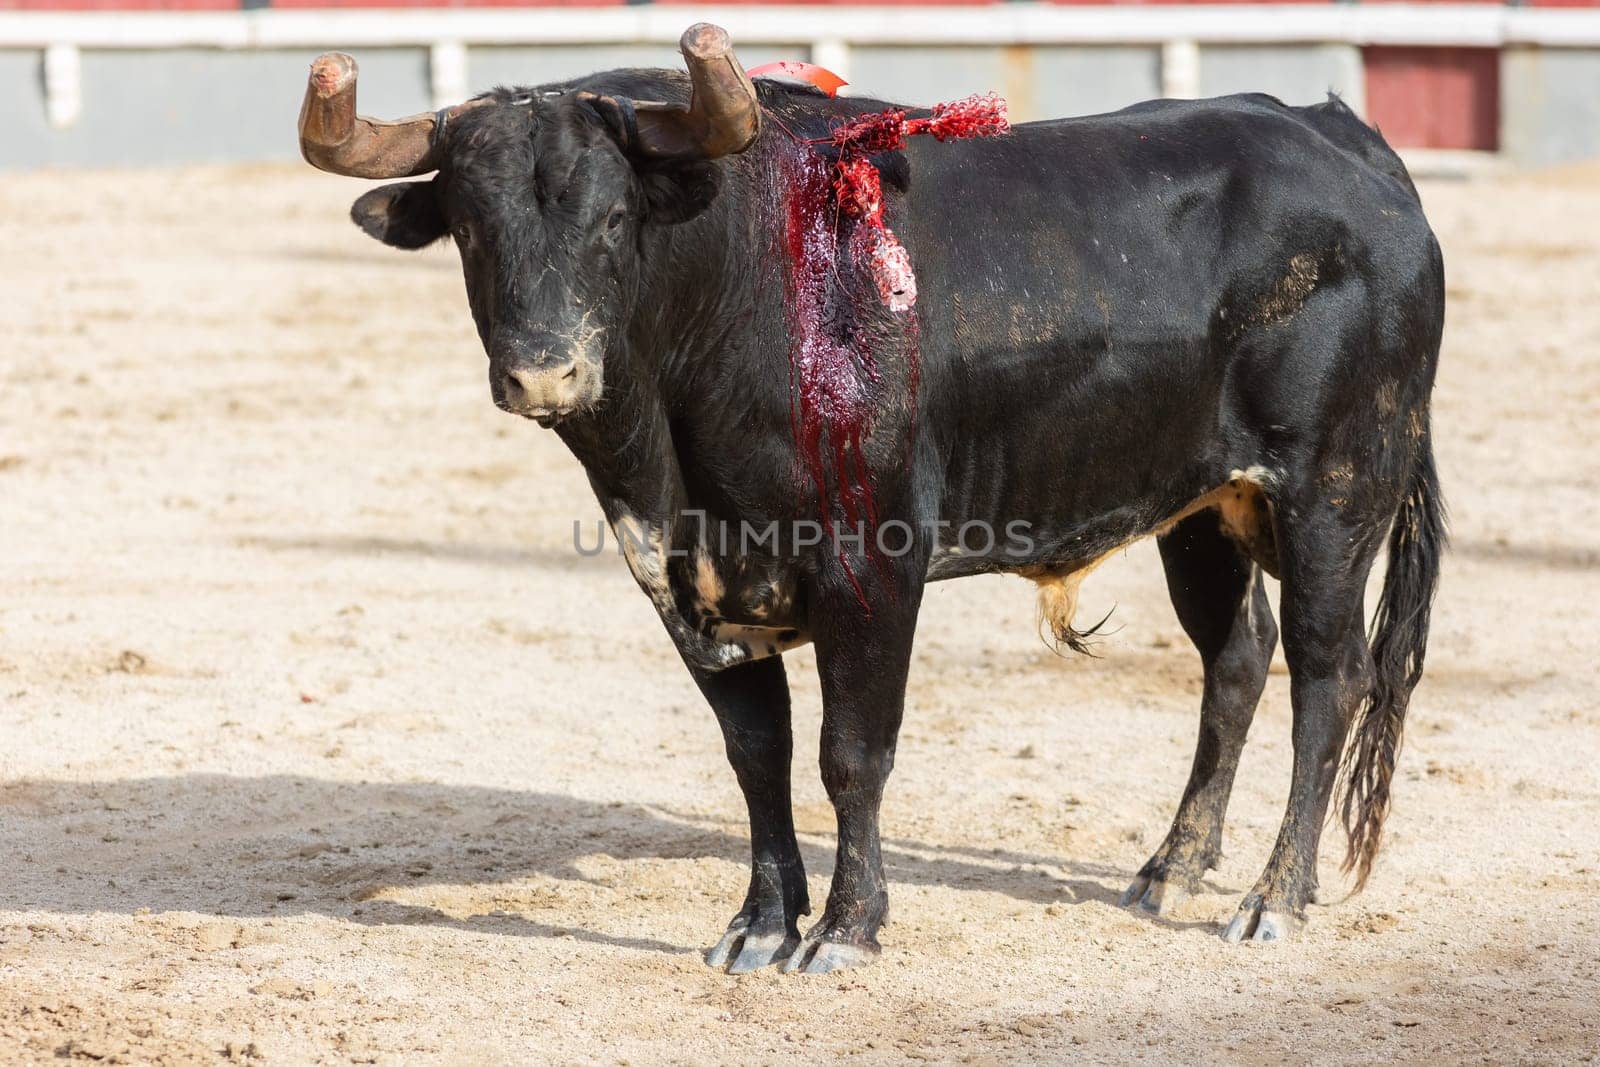 Tourada - black bleeding bull in the arena. Mid shot